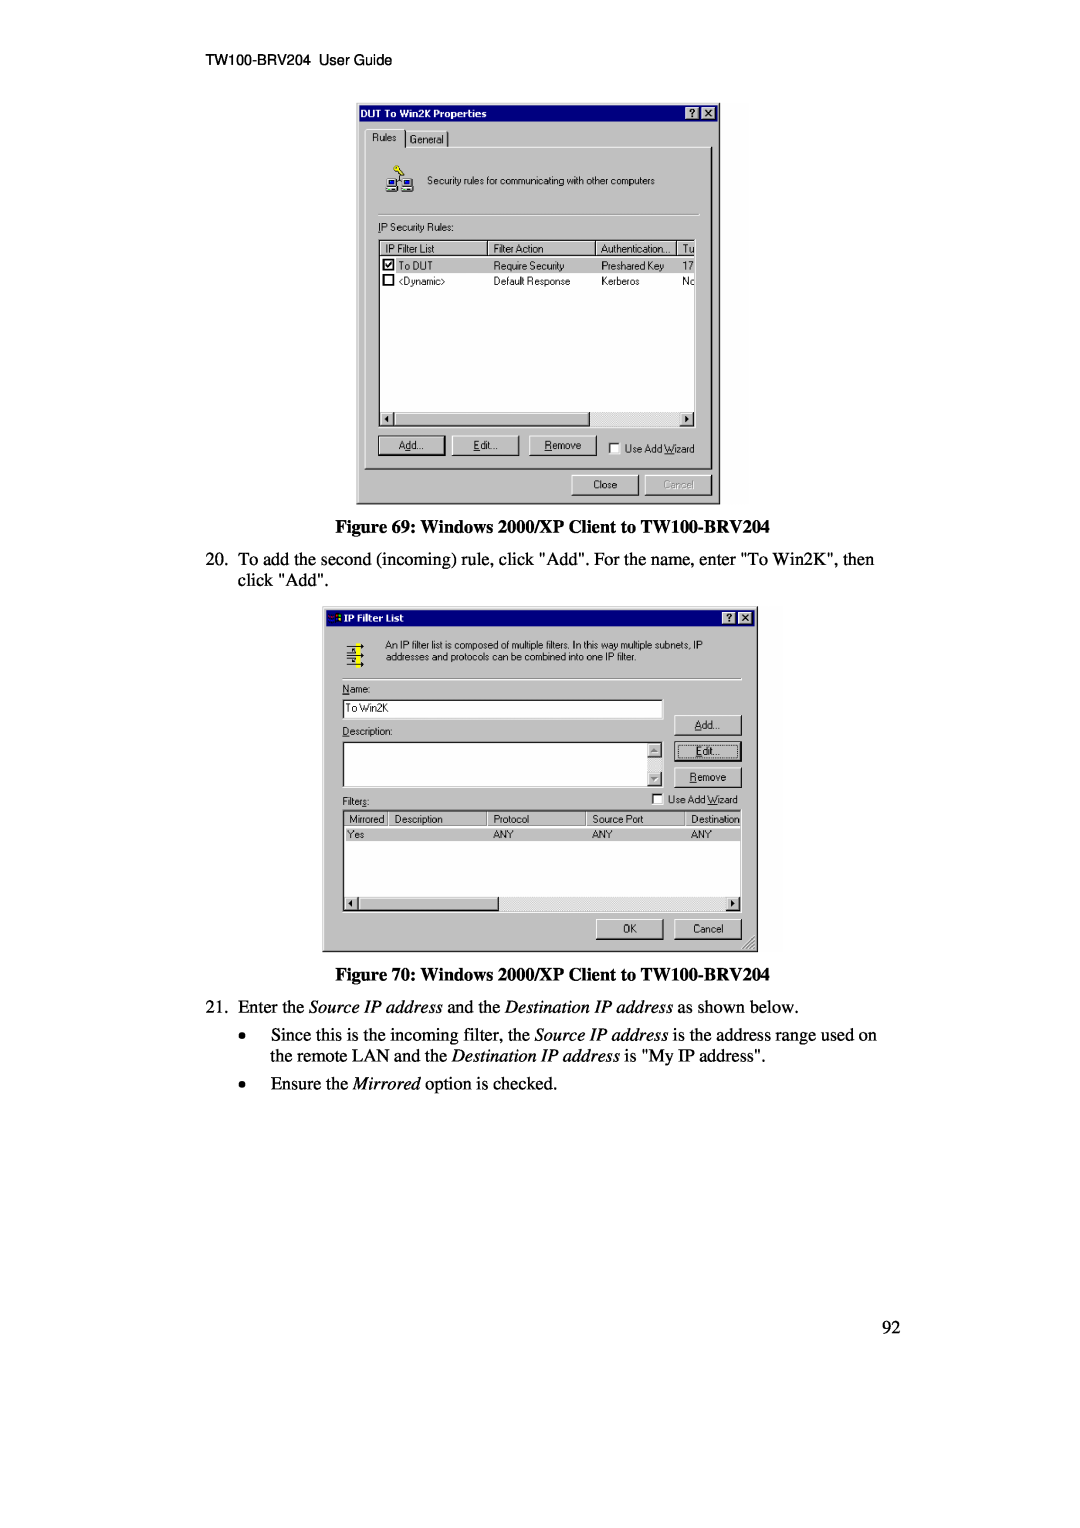 TRENDnet manual Windows 2000/XP Client to TW100-BRV204 